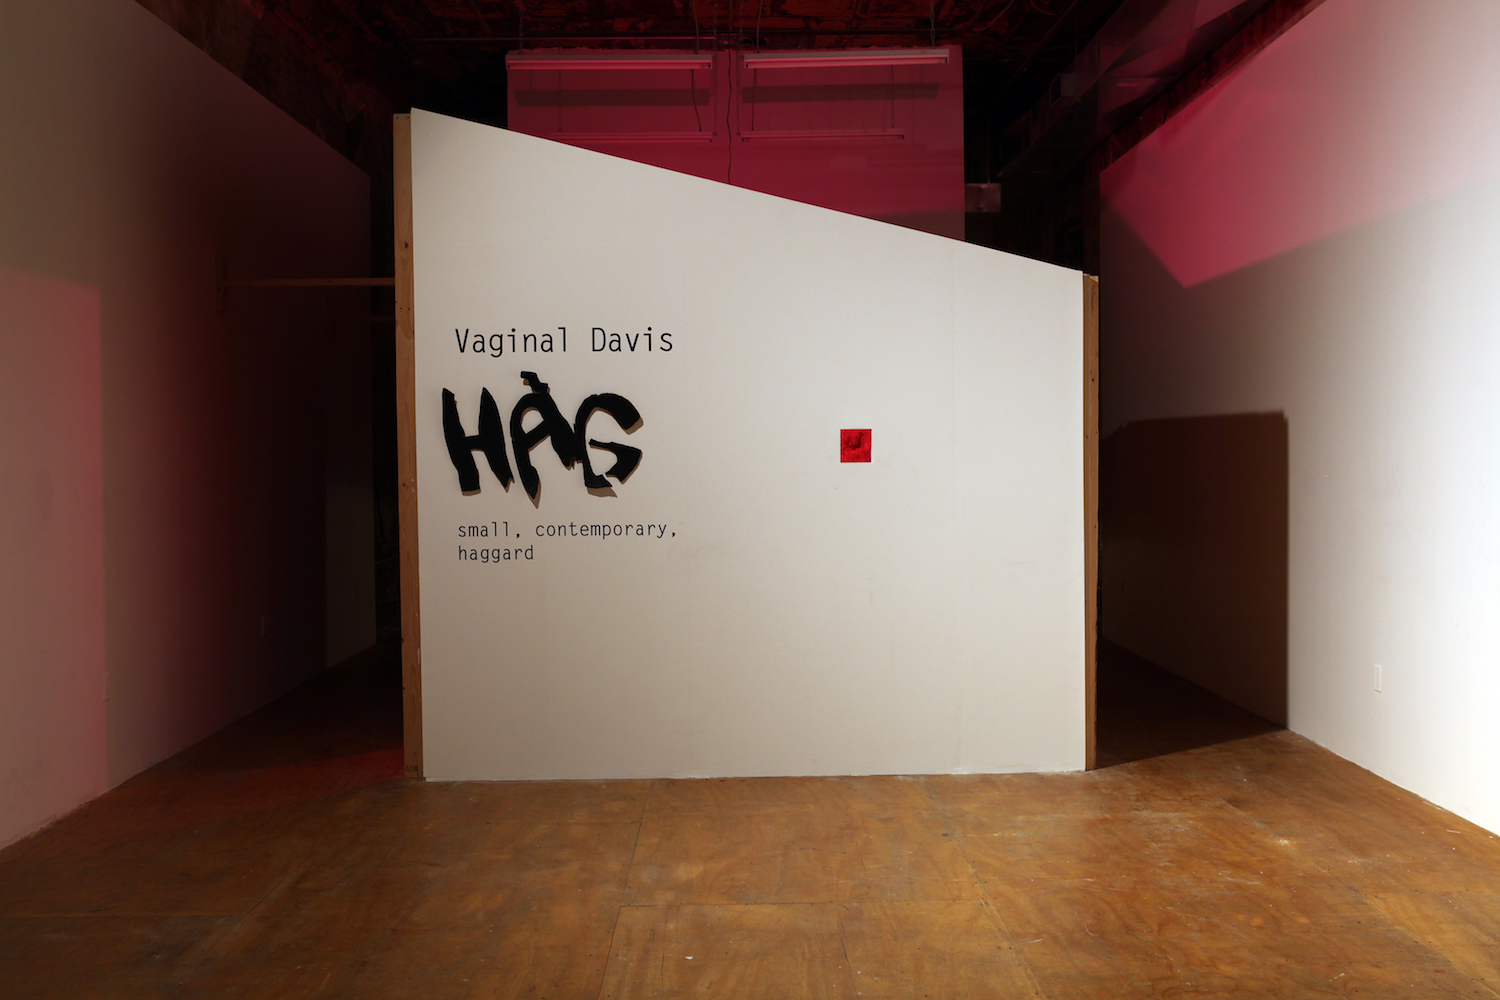 Vaginal Davis, *HAG – small, contemporary, haggard*, 2012. Ames room: wood, sheetrock; vinyl letters, cardboard, pink light bulb